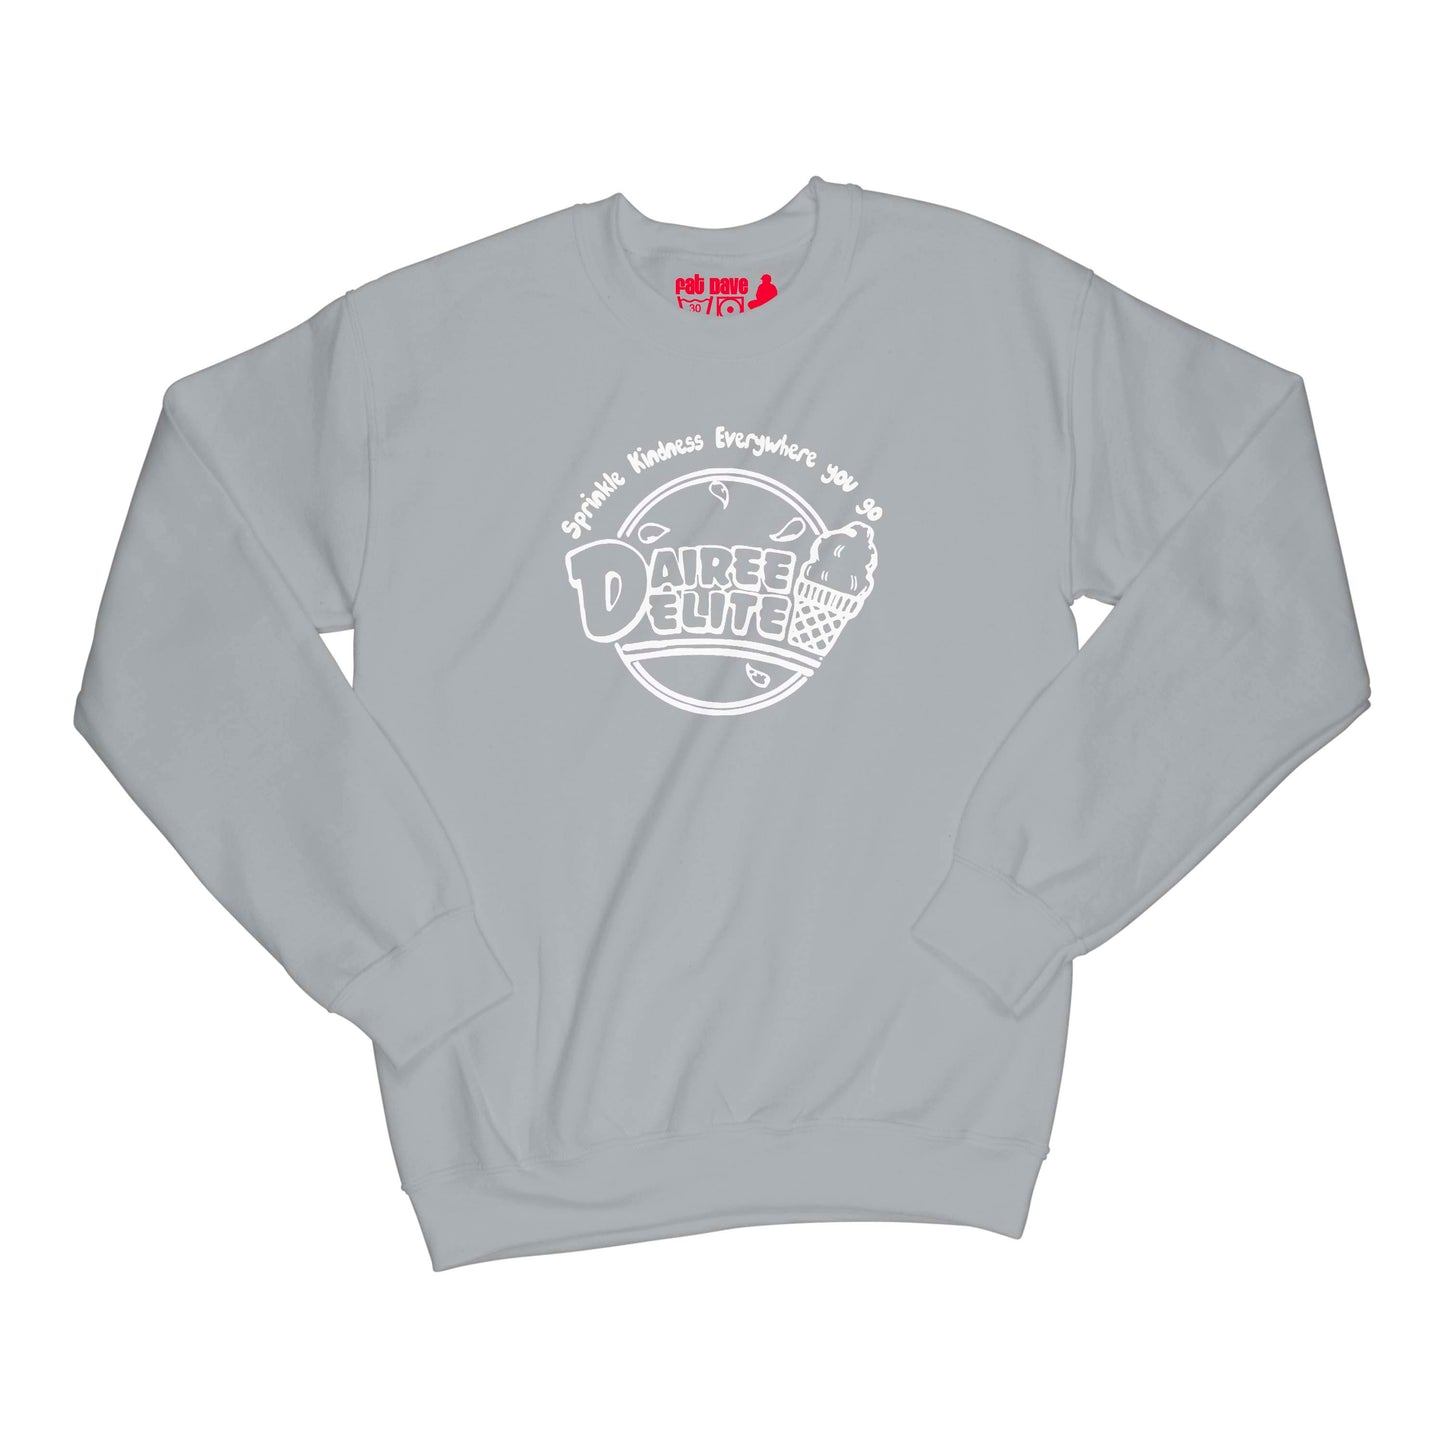 Dairee Delite 70th Anniversary Sprinkle Kindness Sweatshirt Small Sport Grey